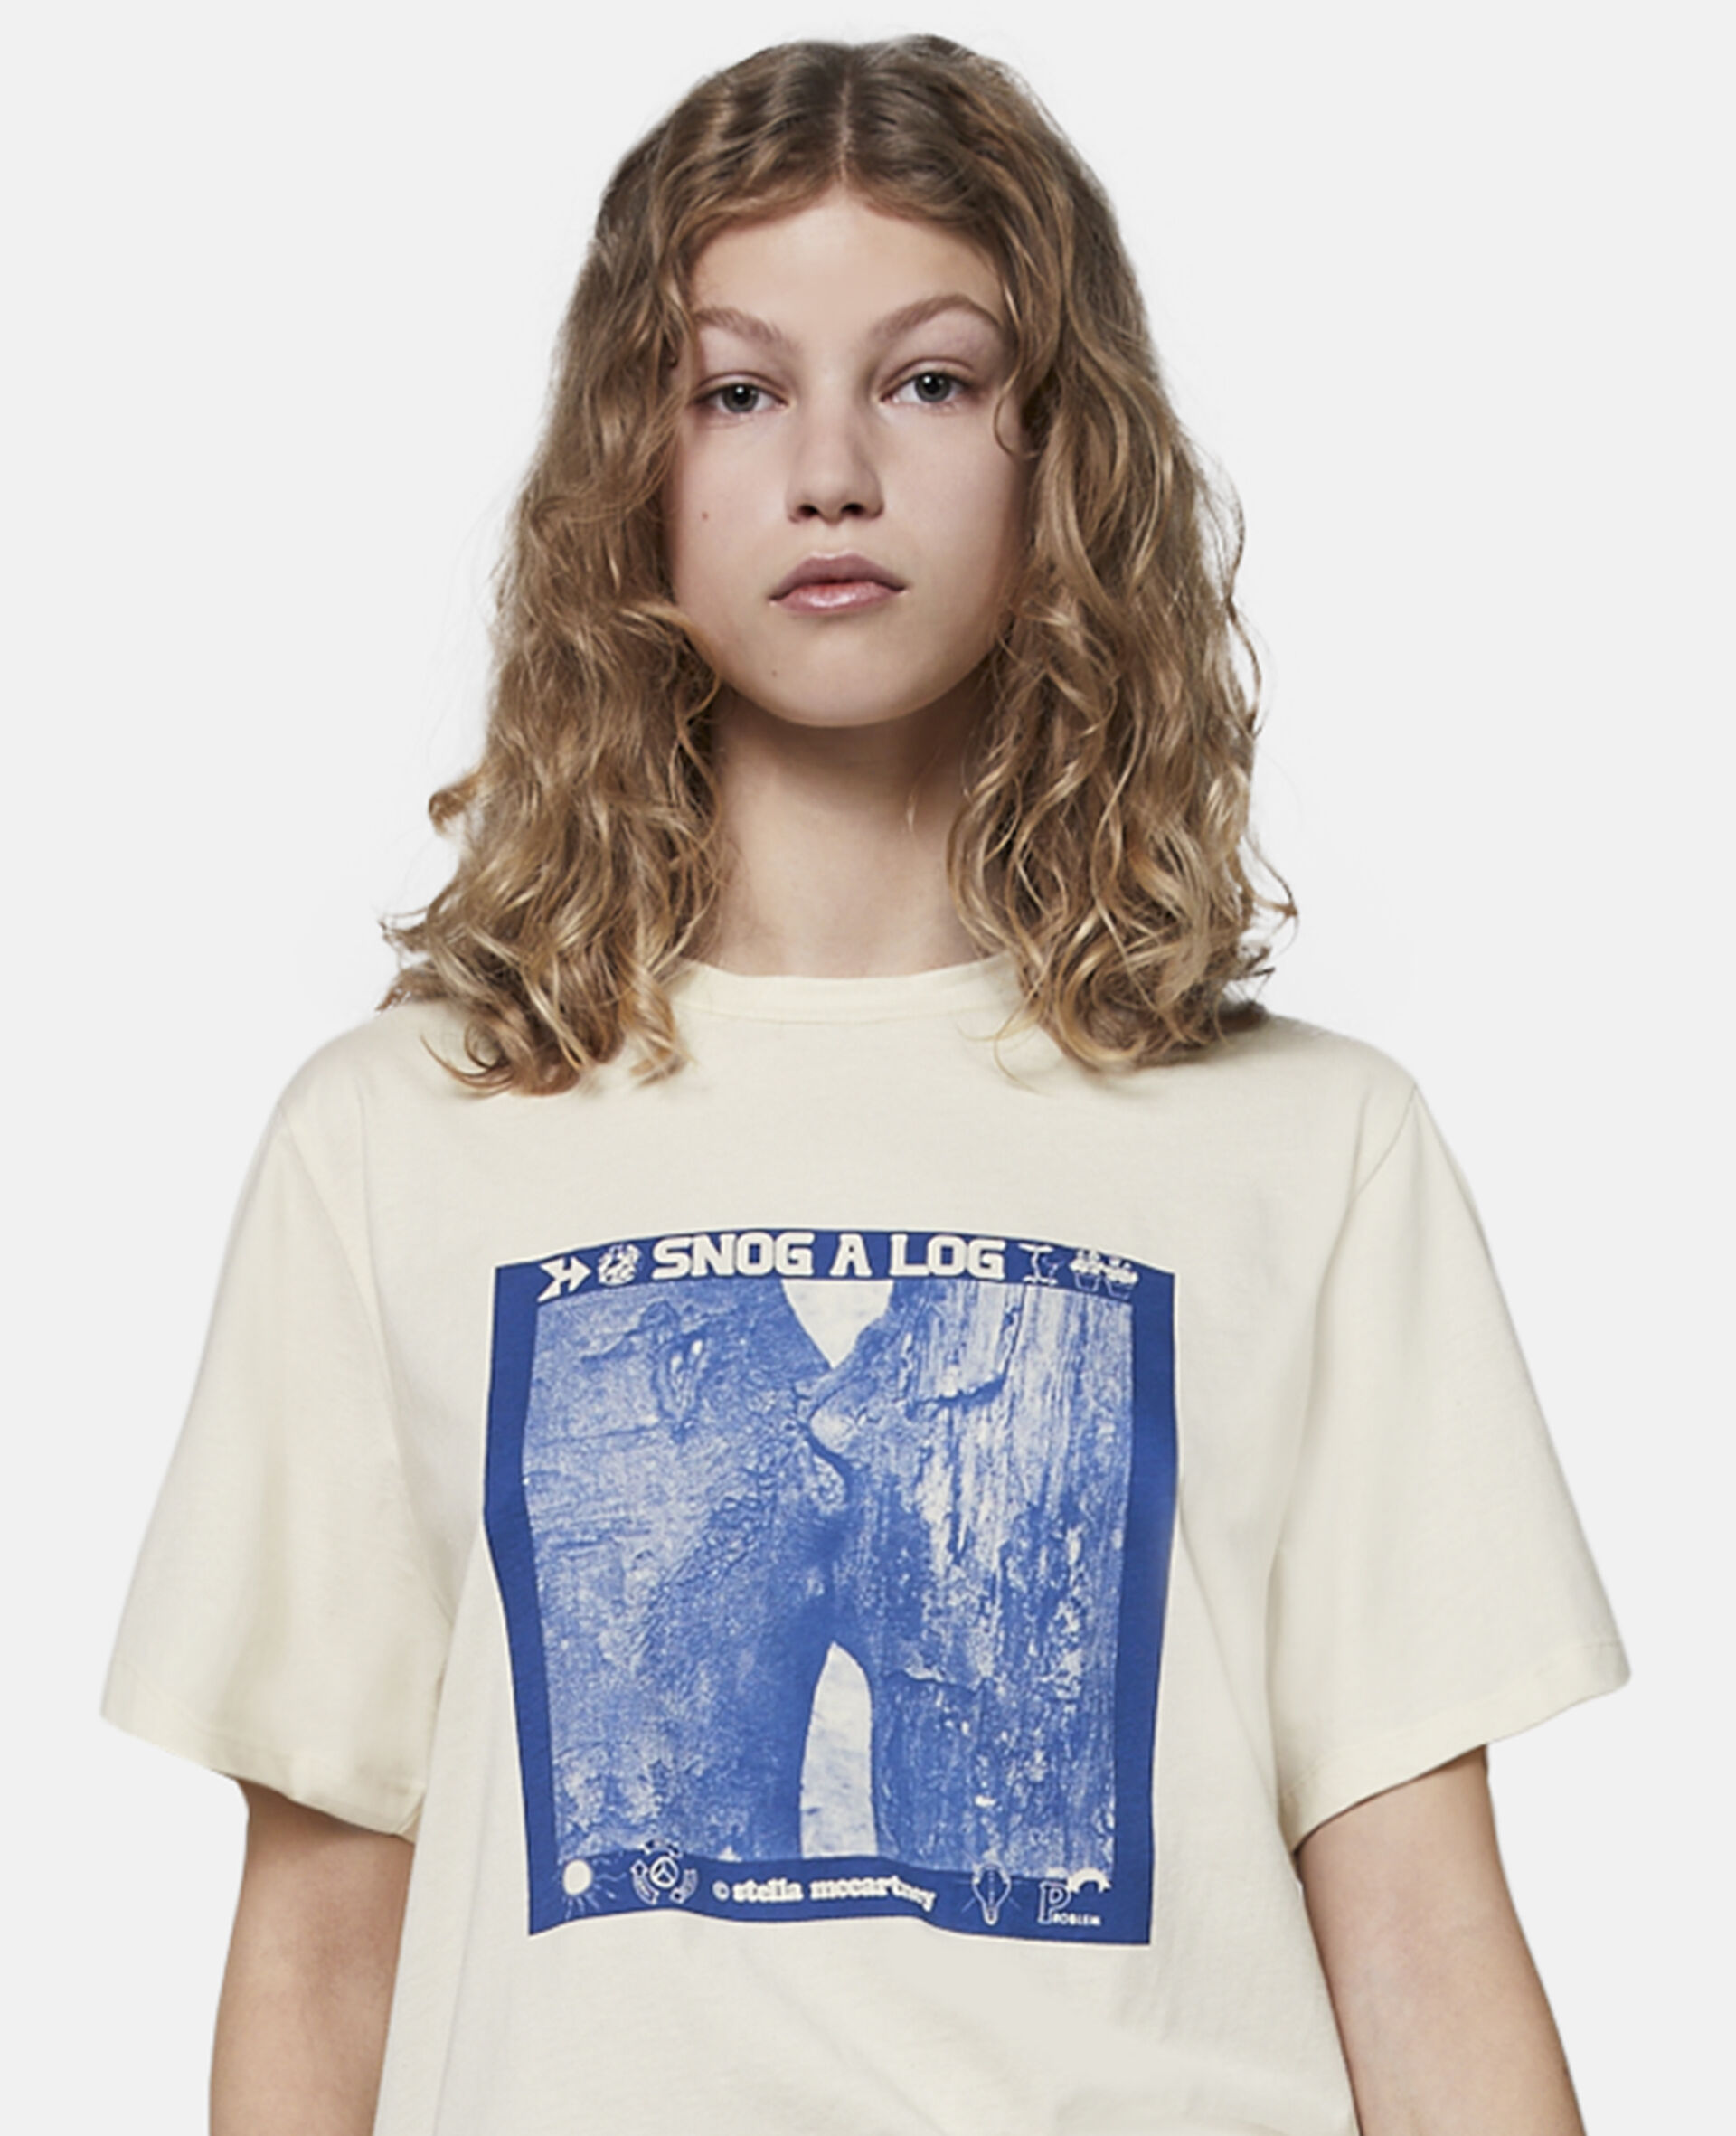 Stella McCartney Releases 100% Regenerative Cotton T-Shirt